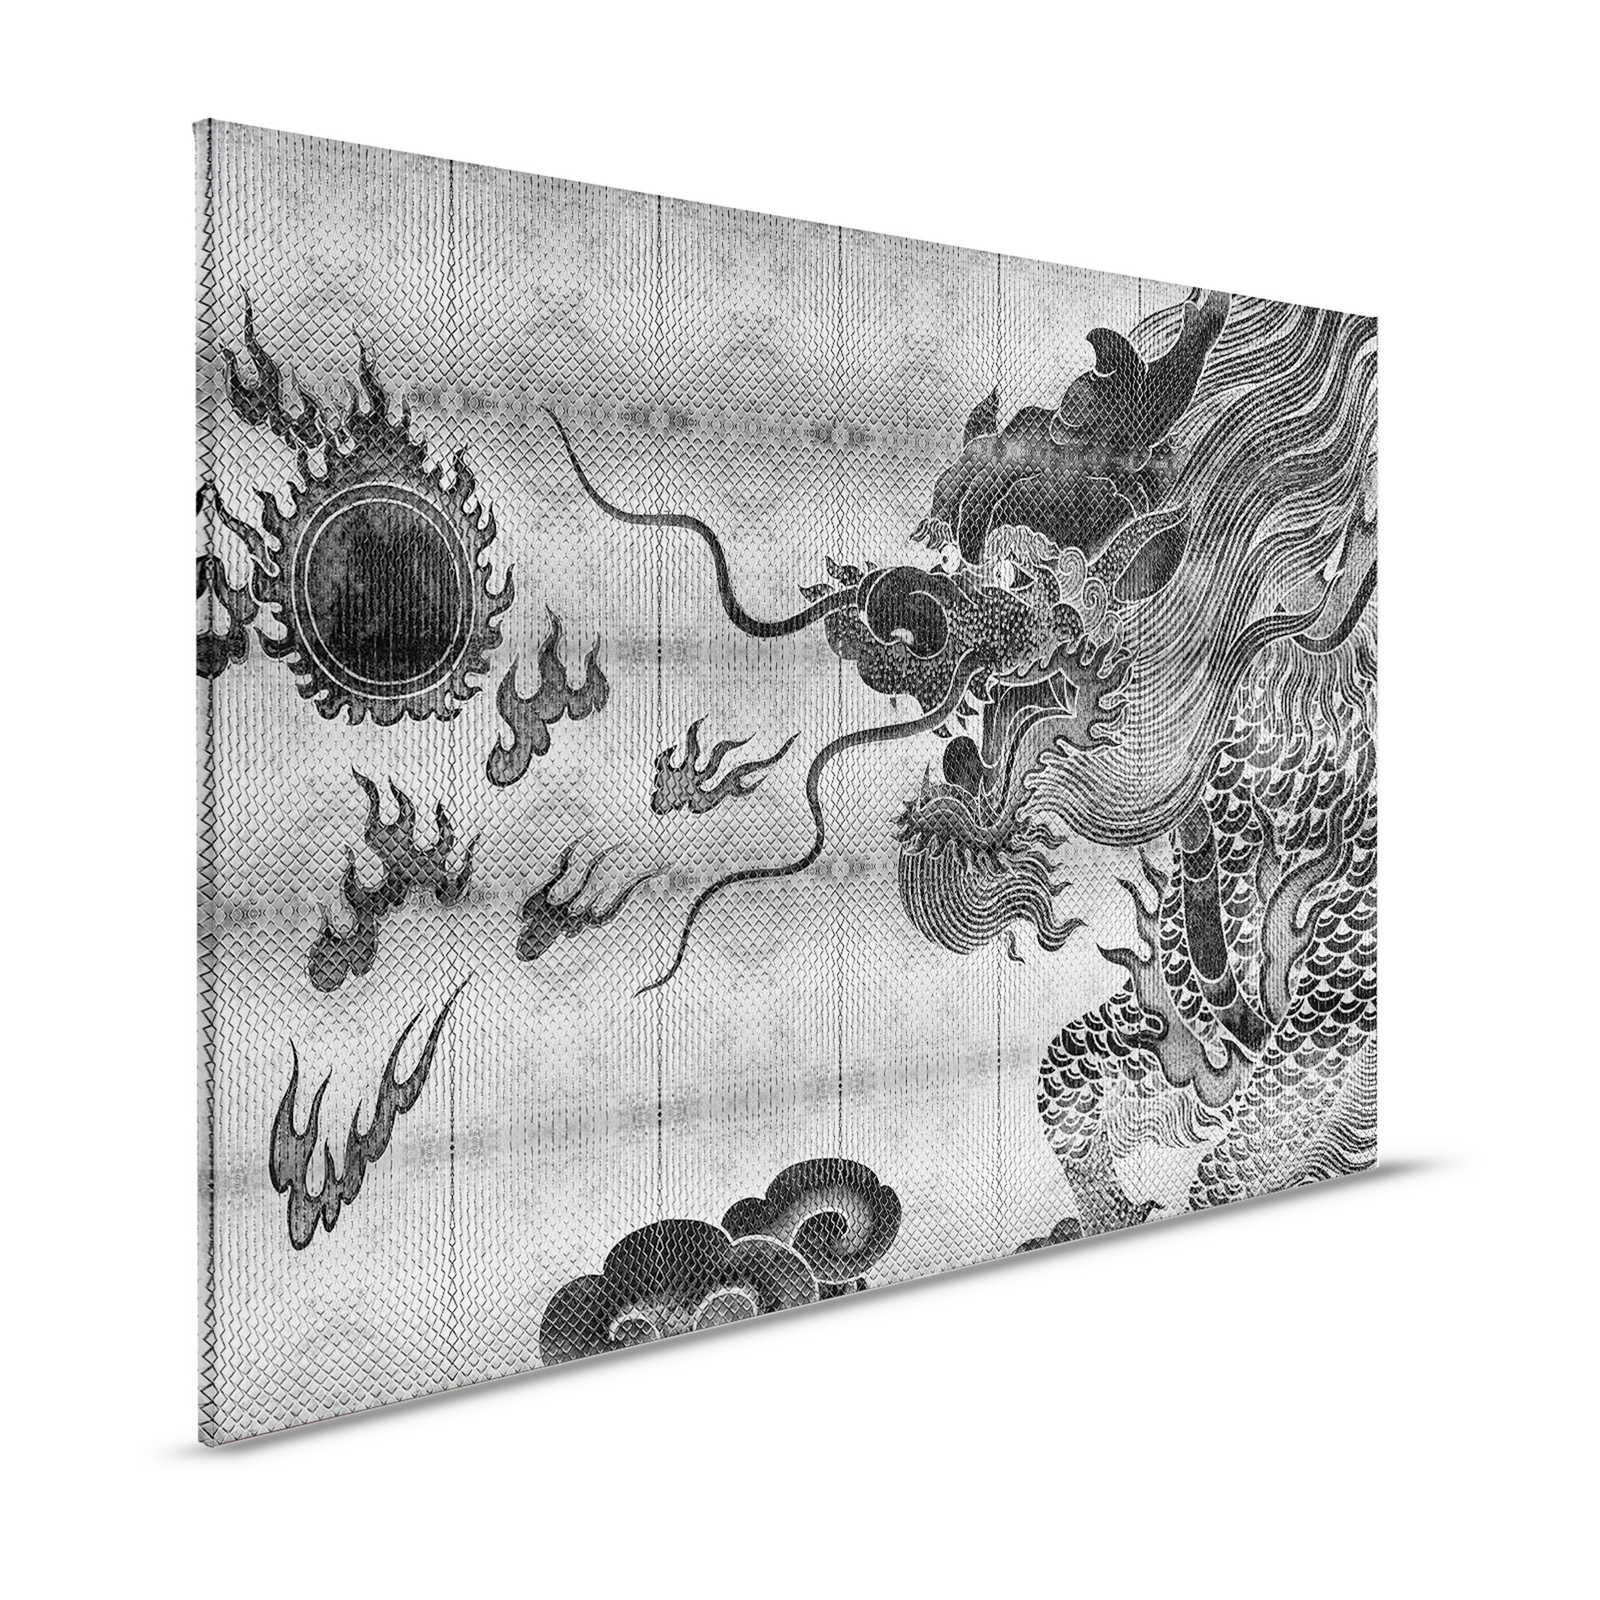 Shenzen 3 - Draak Canvas Schilderij Metallic Zilver Aziatische Stijl - 1.20 m x 0.80 m
